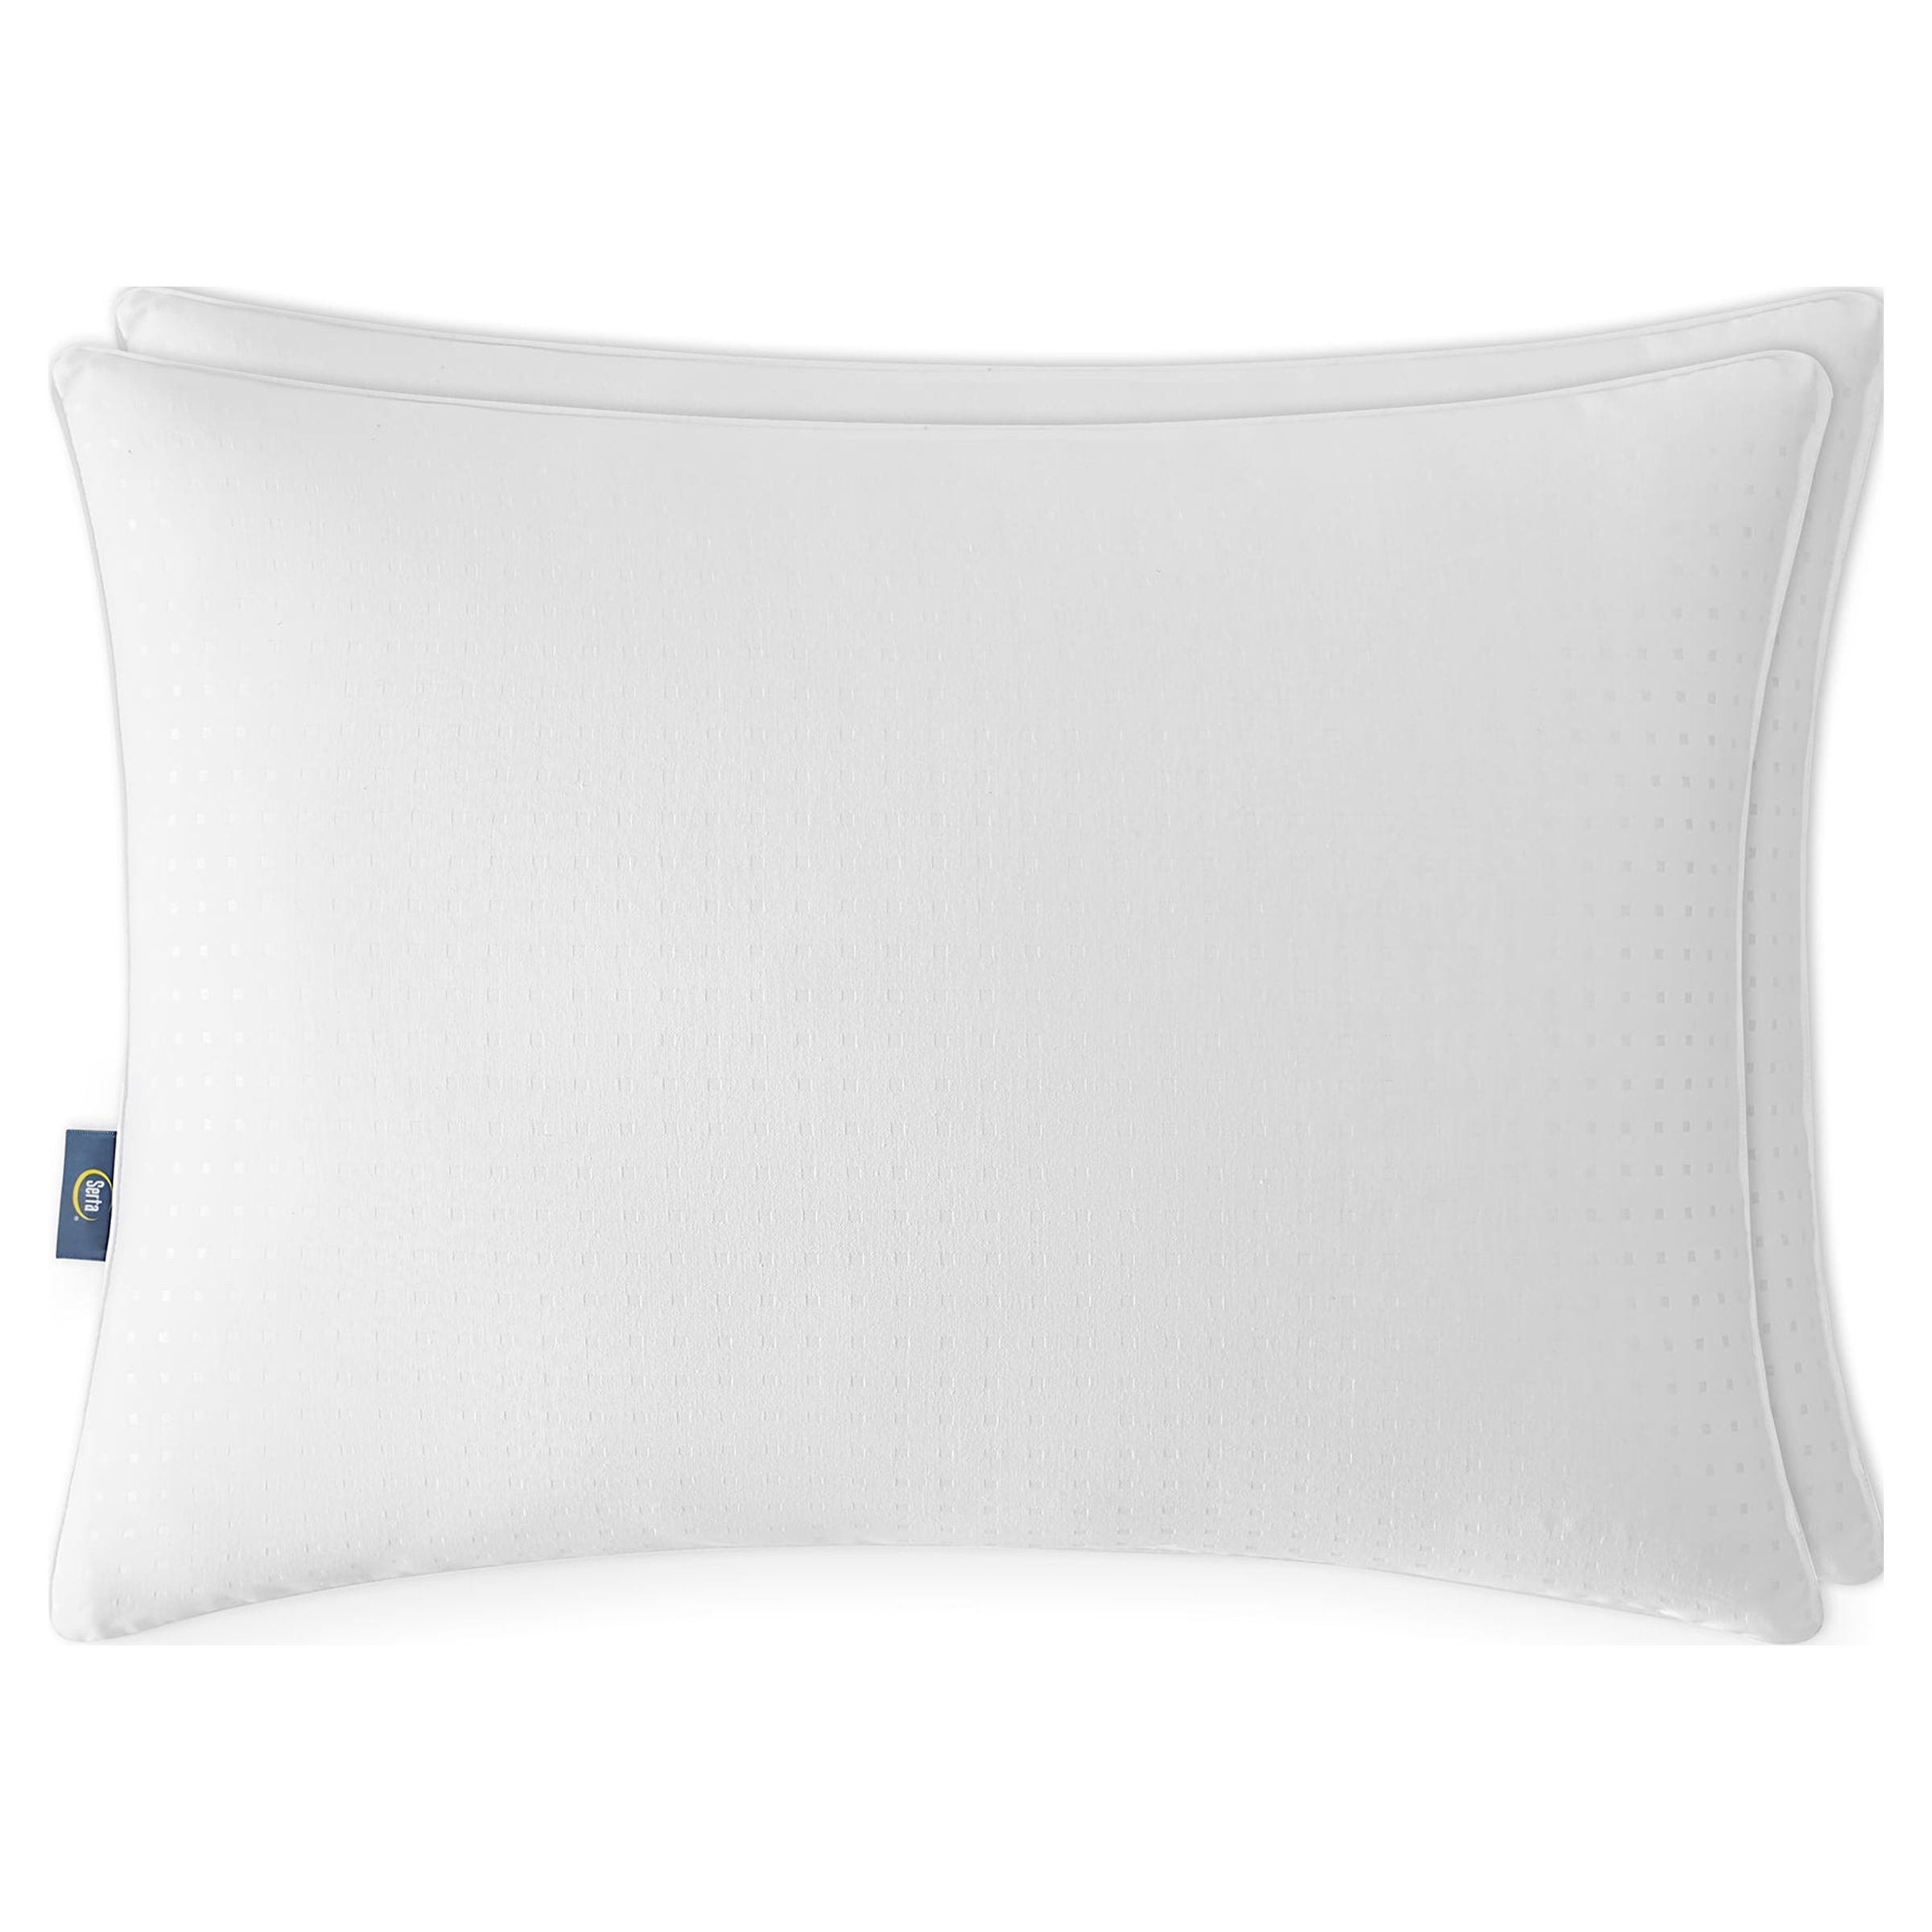 Serta Sertapedic Won't Go Flat White Pillow, 2 Count - image 2 of 5